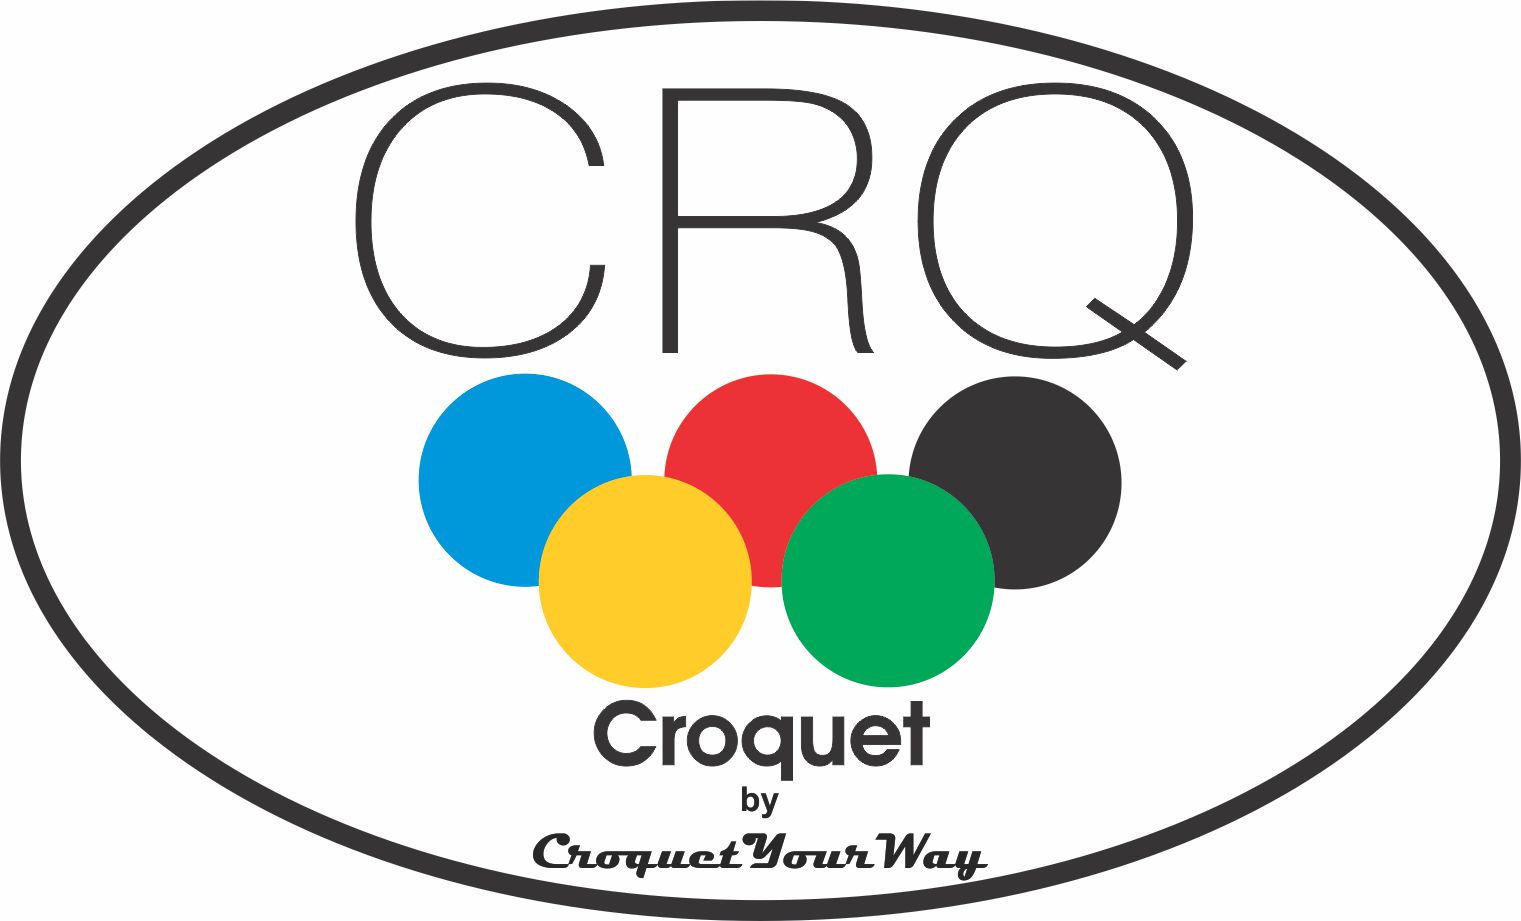 CRQ 535 Croquet Corner, CRQ Amish Made Classic, White, 14 inch, 4 piece